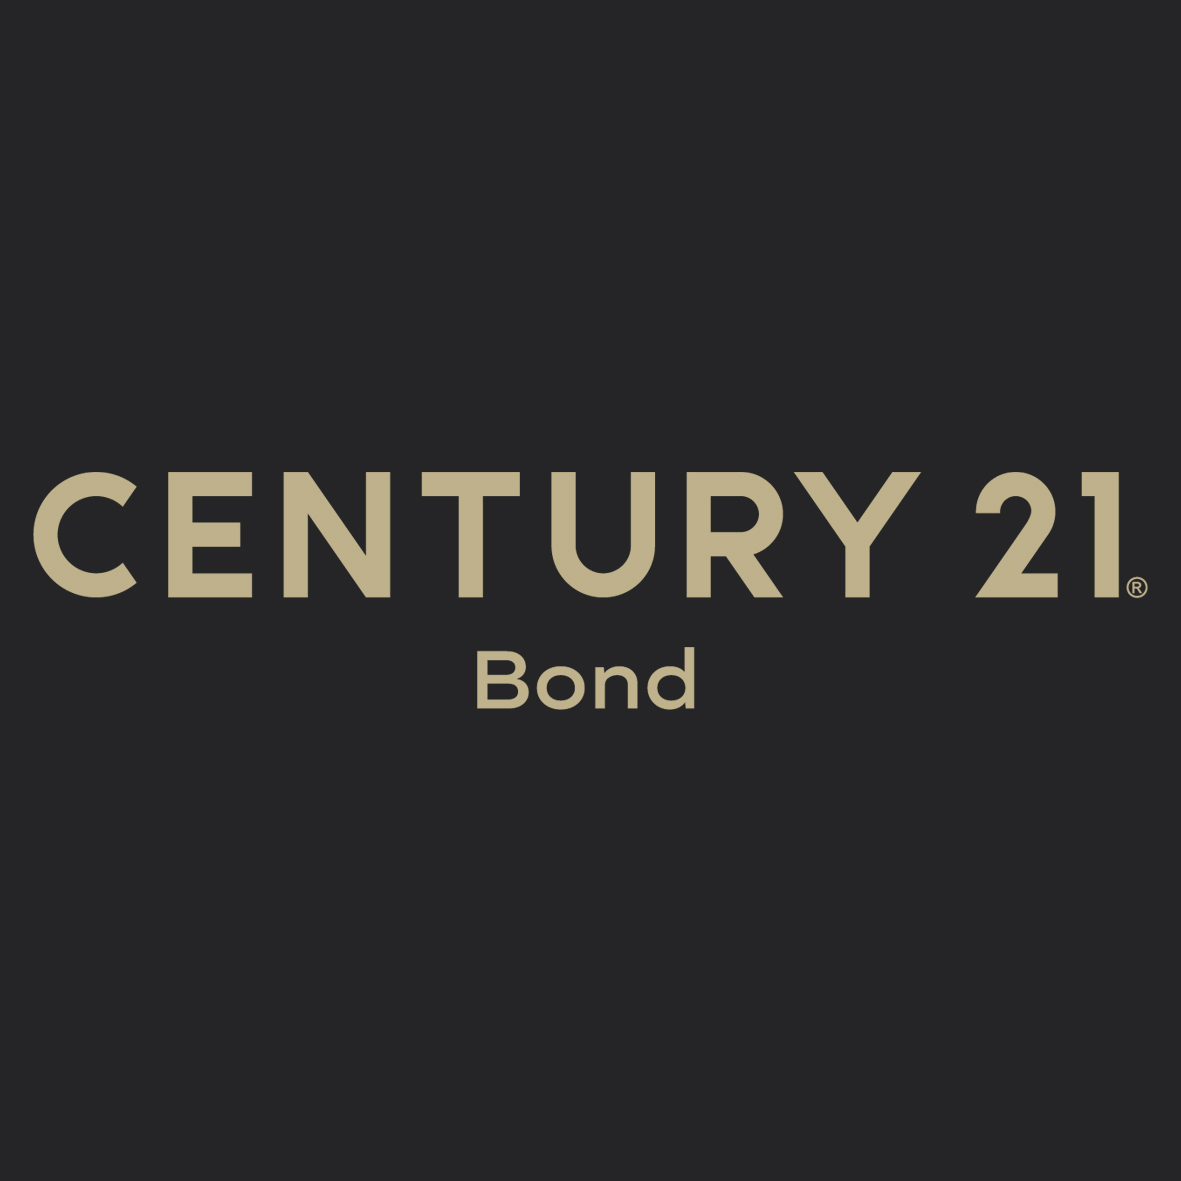 CENTURY 21 Bond